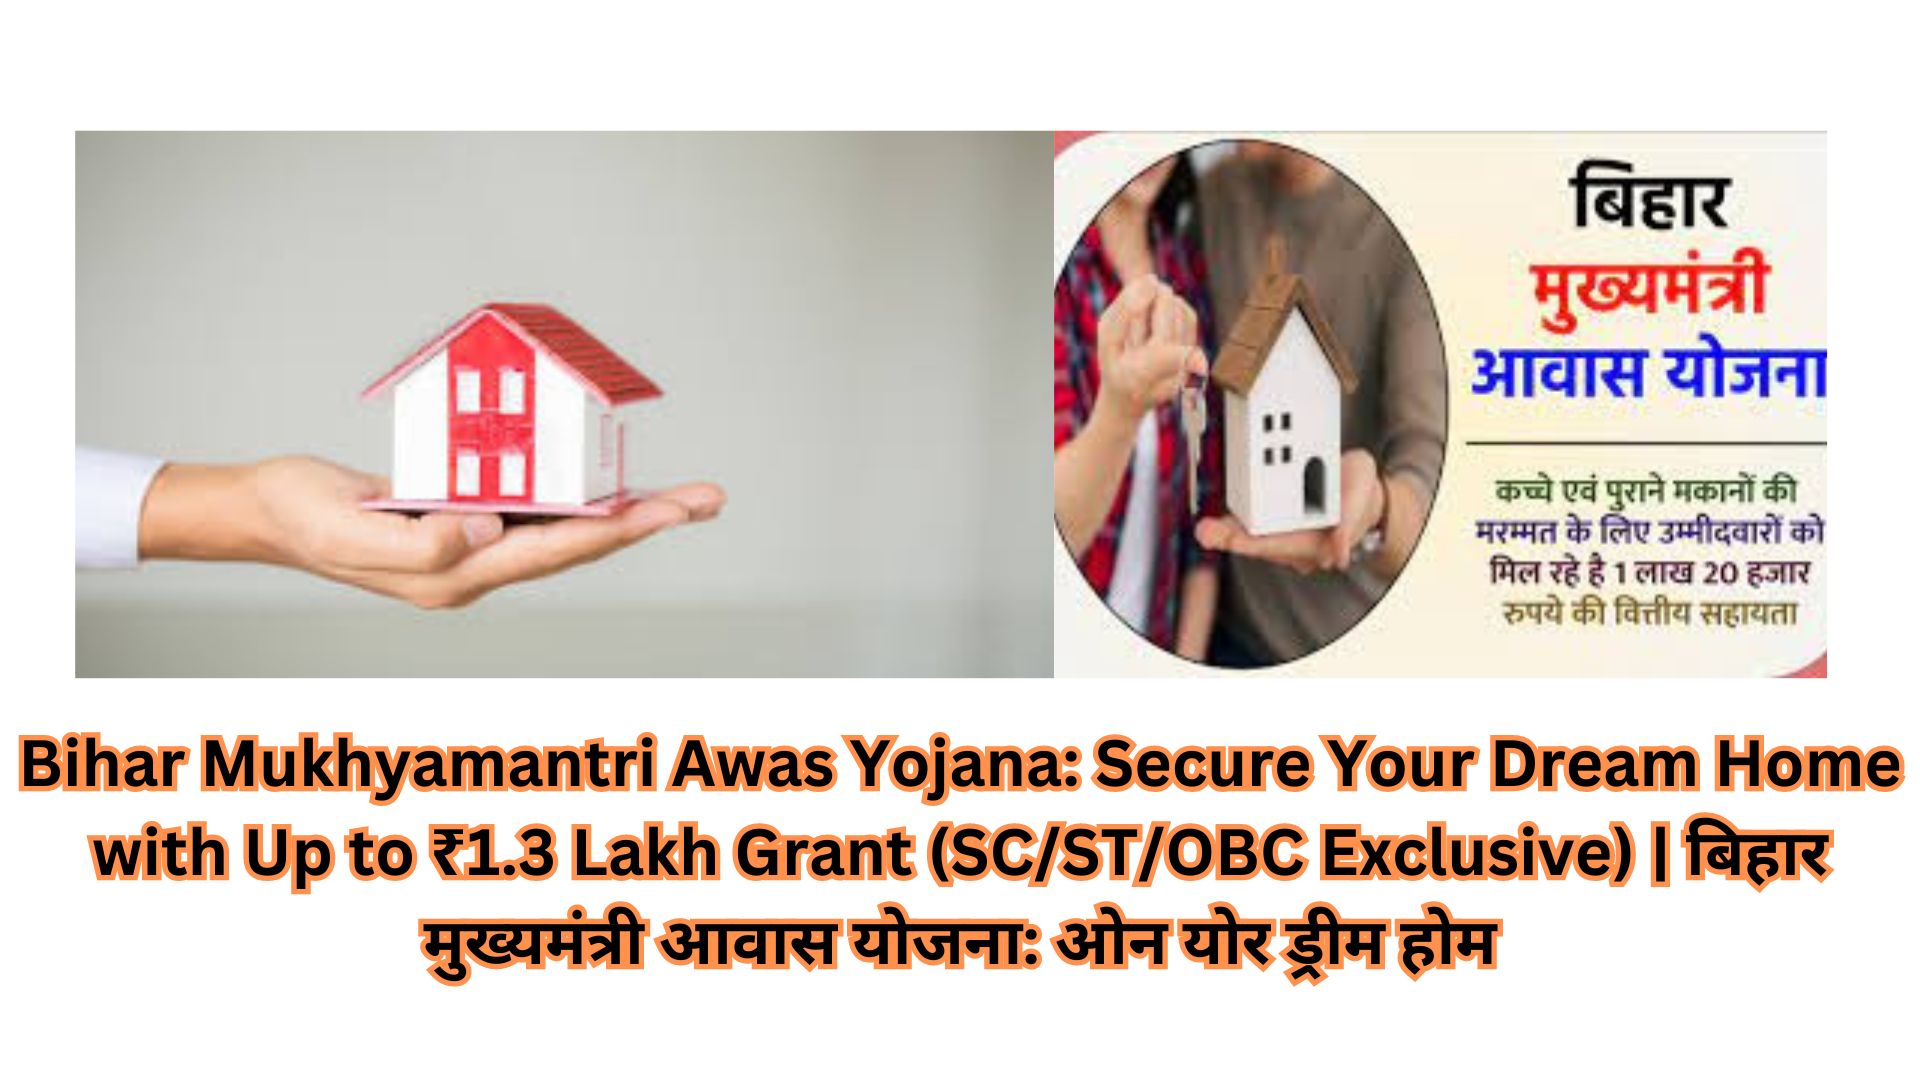 Bihar Mukhyamantri Awas Yojana: Secure Your Dream Home with Up to ₹1.3 Lakh Grant (SC/ST/OBC Exclusive) | बिहार मुख्यमंत्री आवास योजना: ओन योर ड्रीम होम